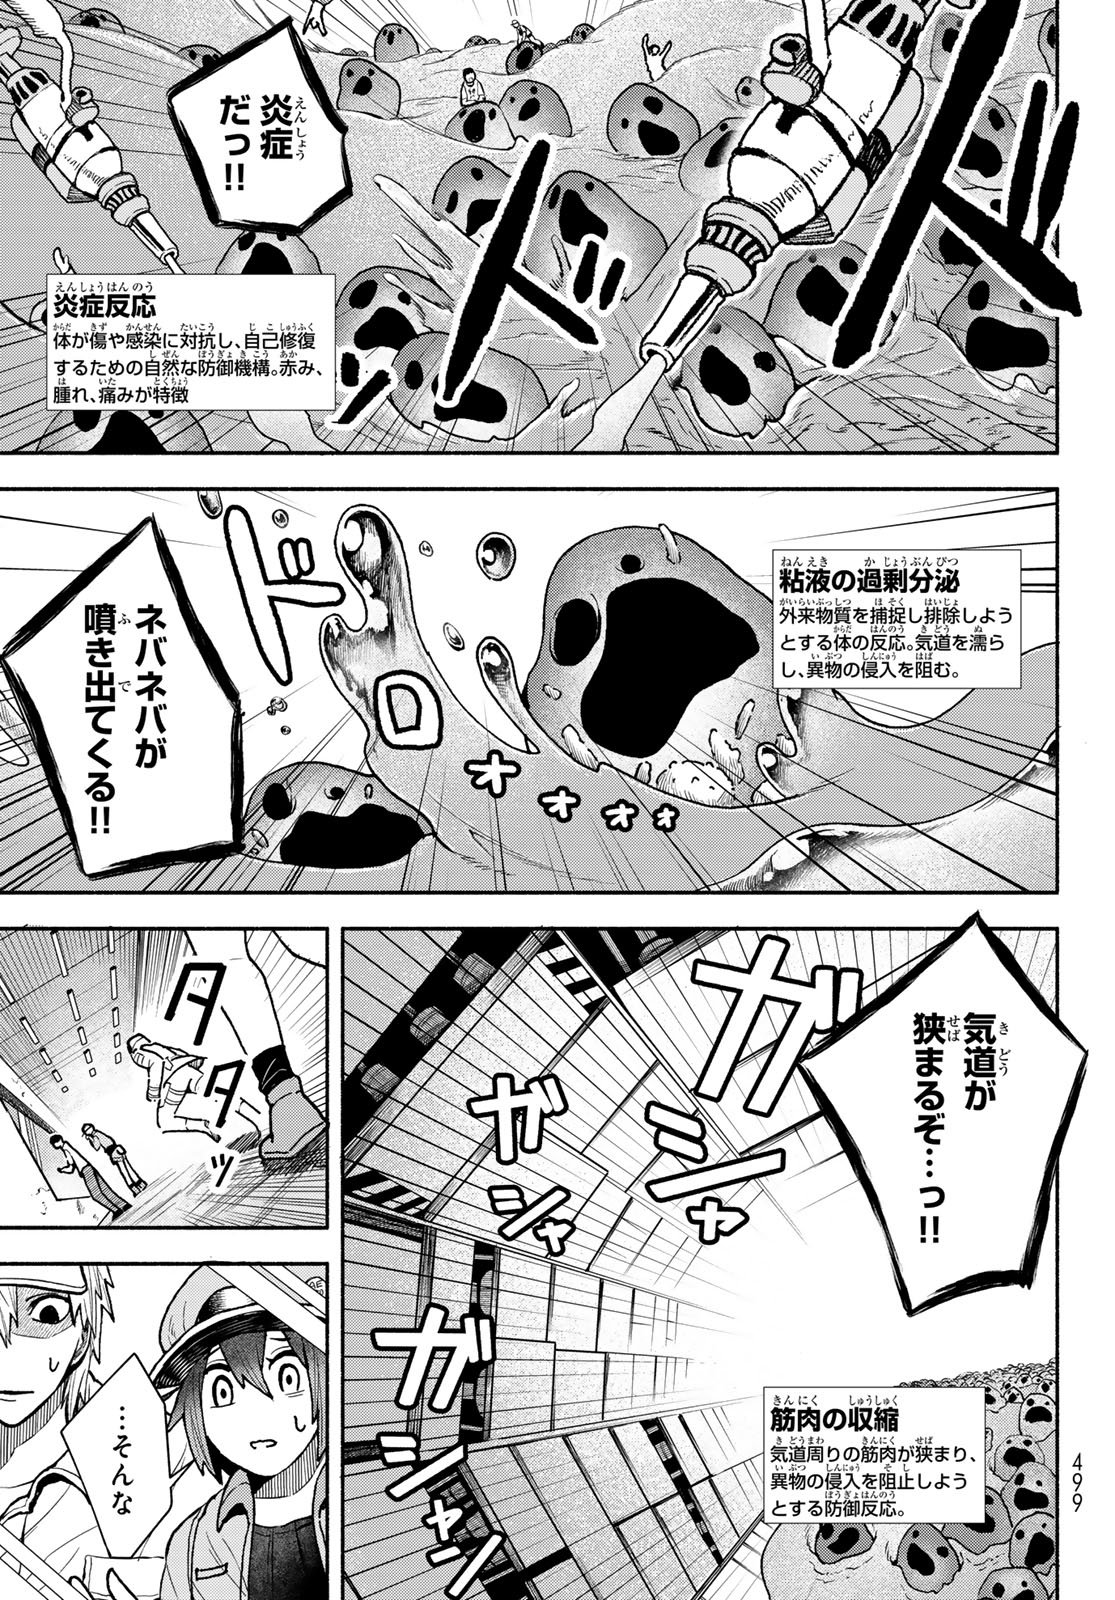 Hataraku Saibou Okusuri - Chapter 11 - Page 7